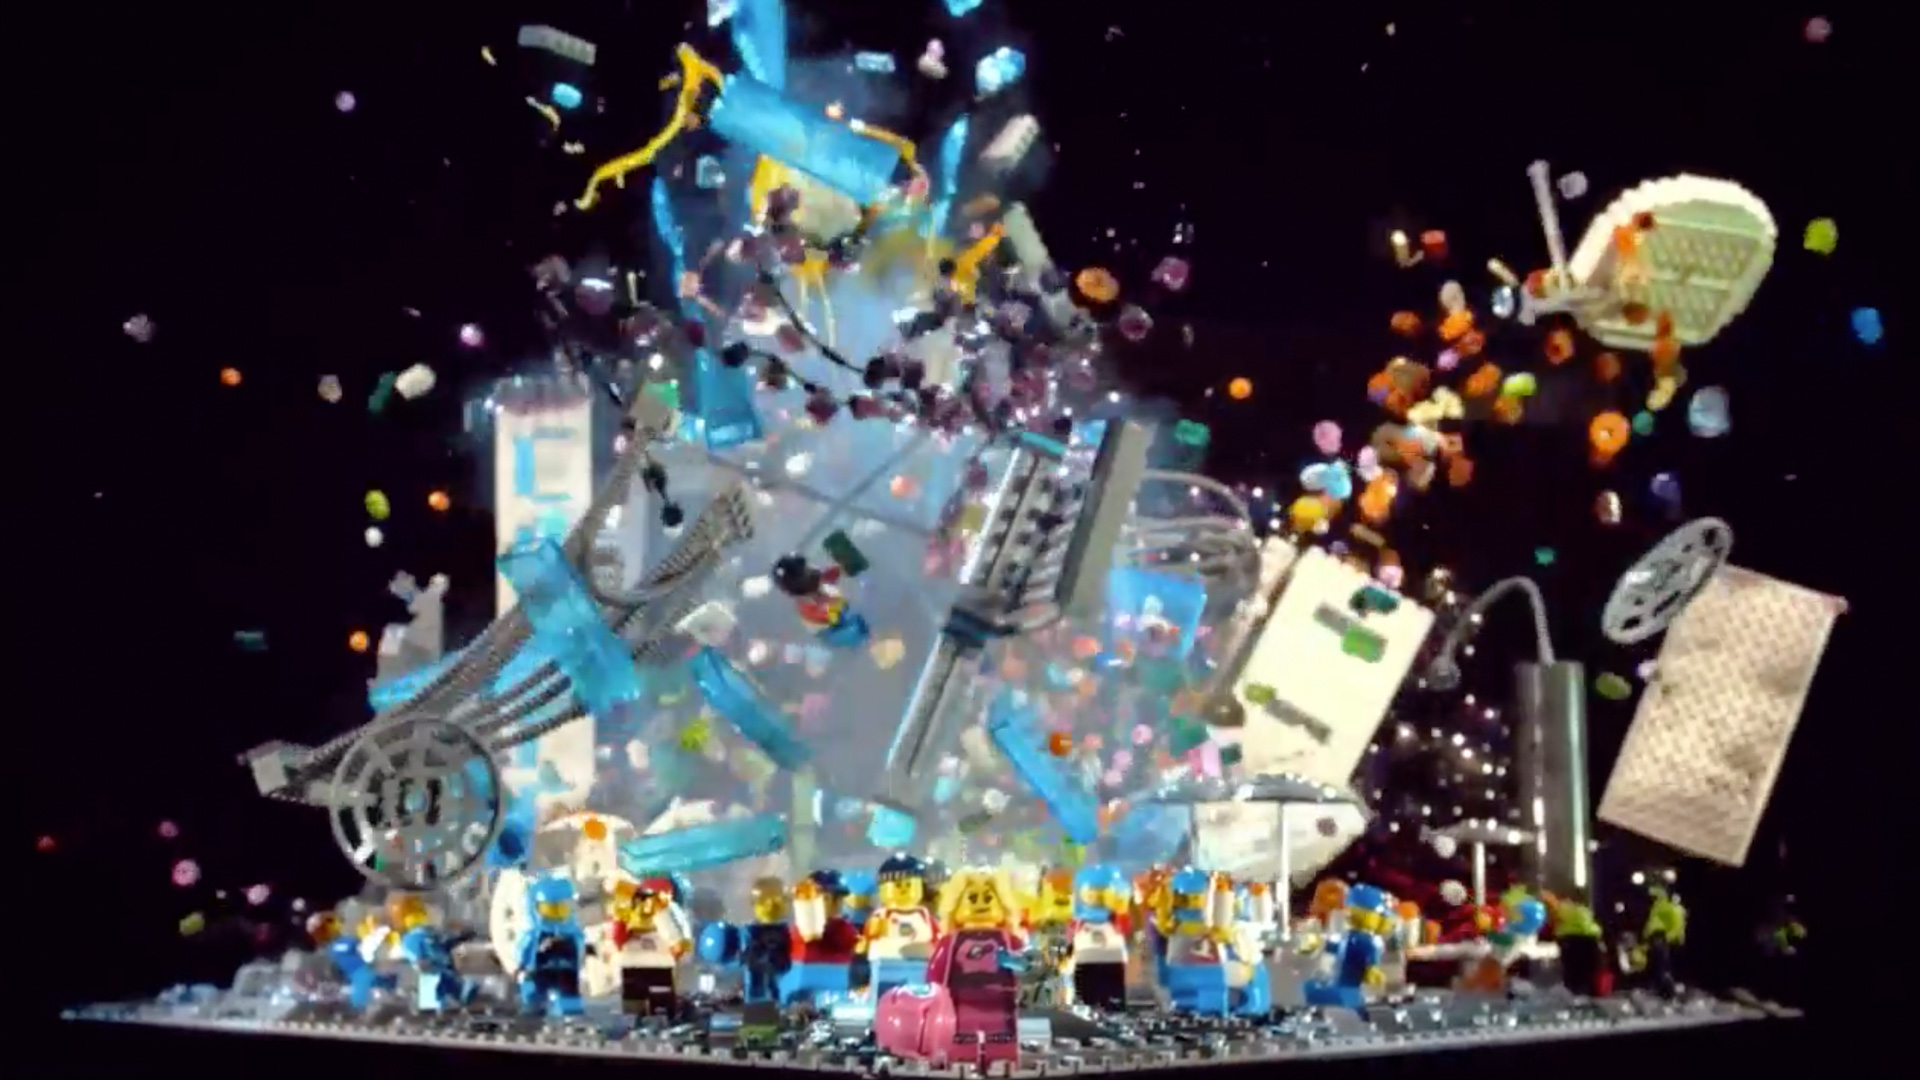 LEGO Masters U.S Season 2 – Explosion Challenge – Natalie and Michelle - Intergalactic Girl - Slime - Intergalactic Pick Me Up